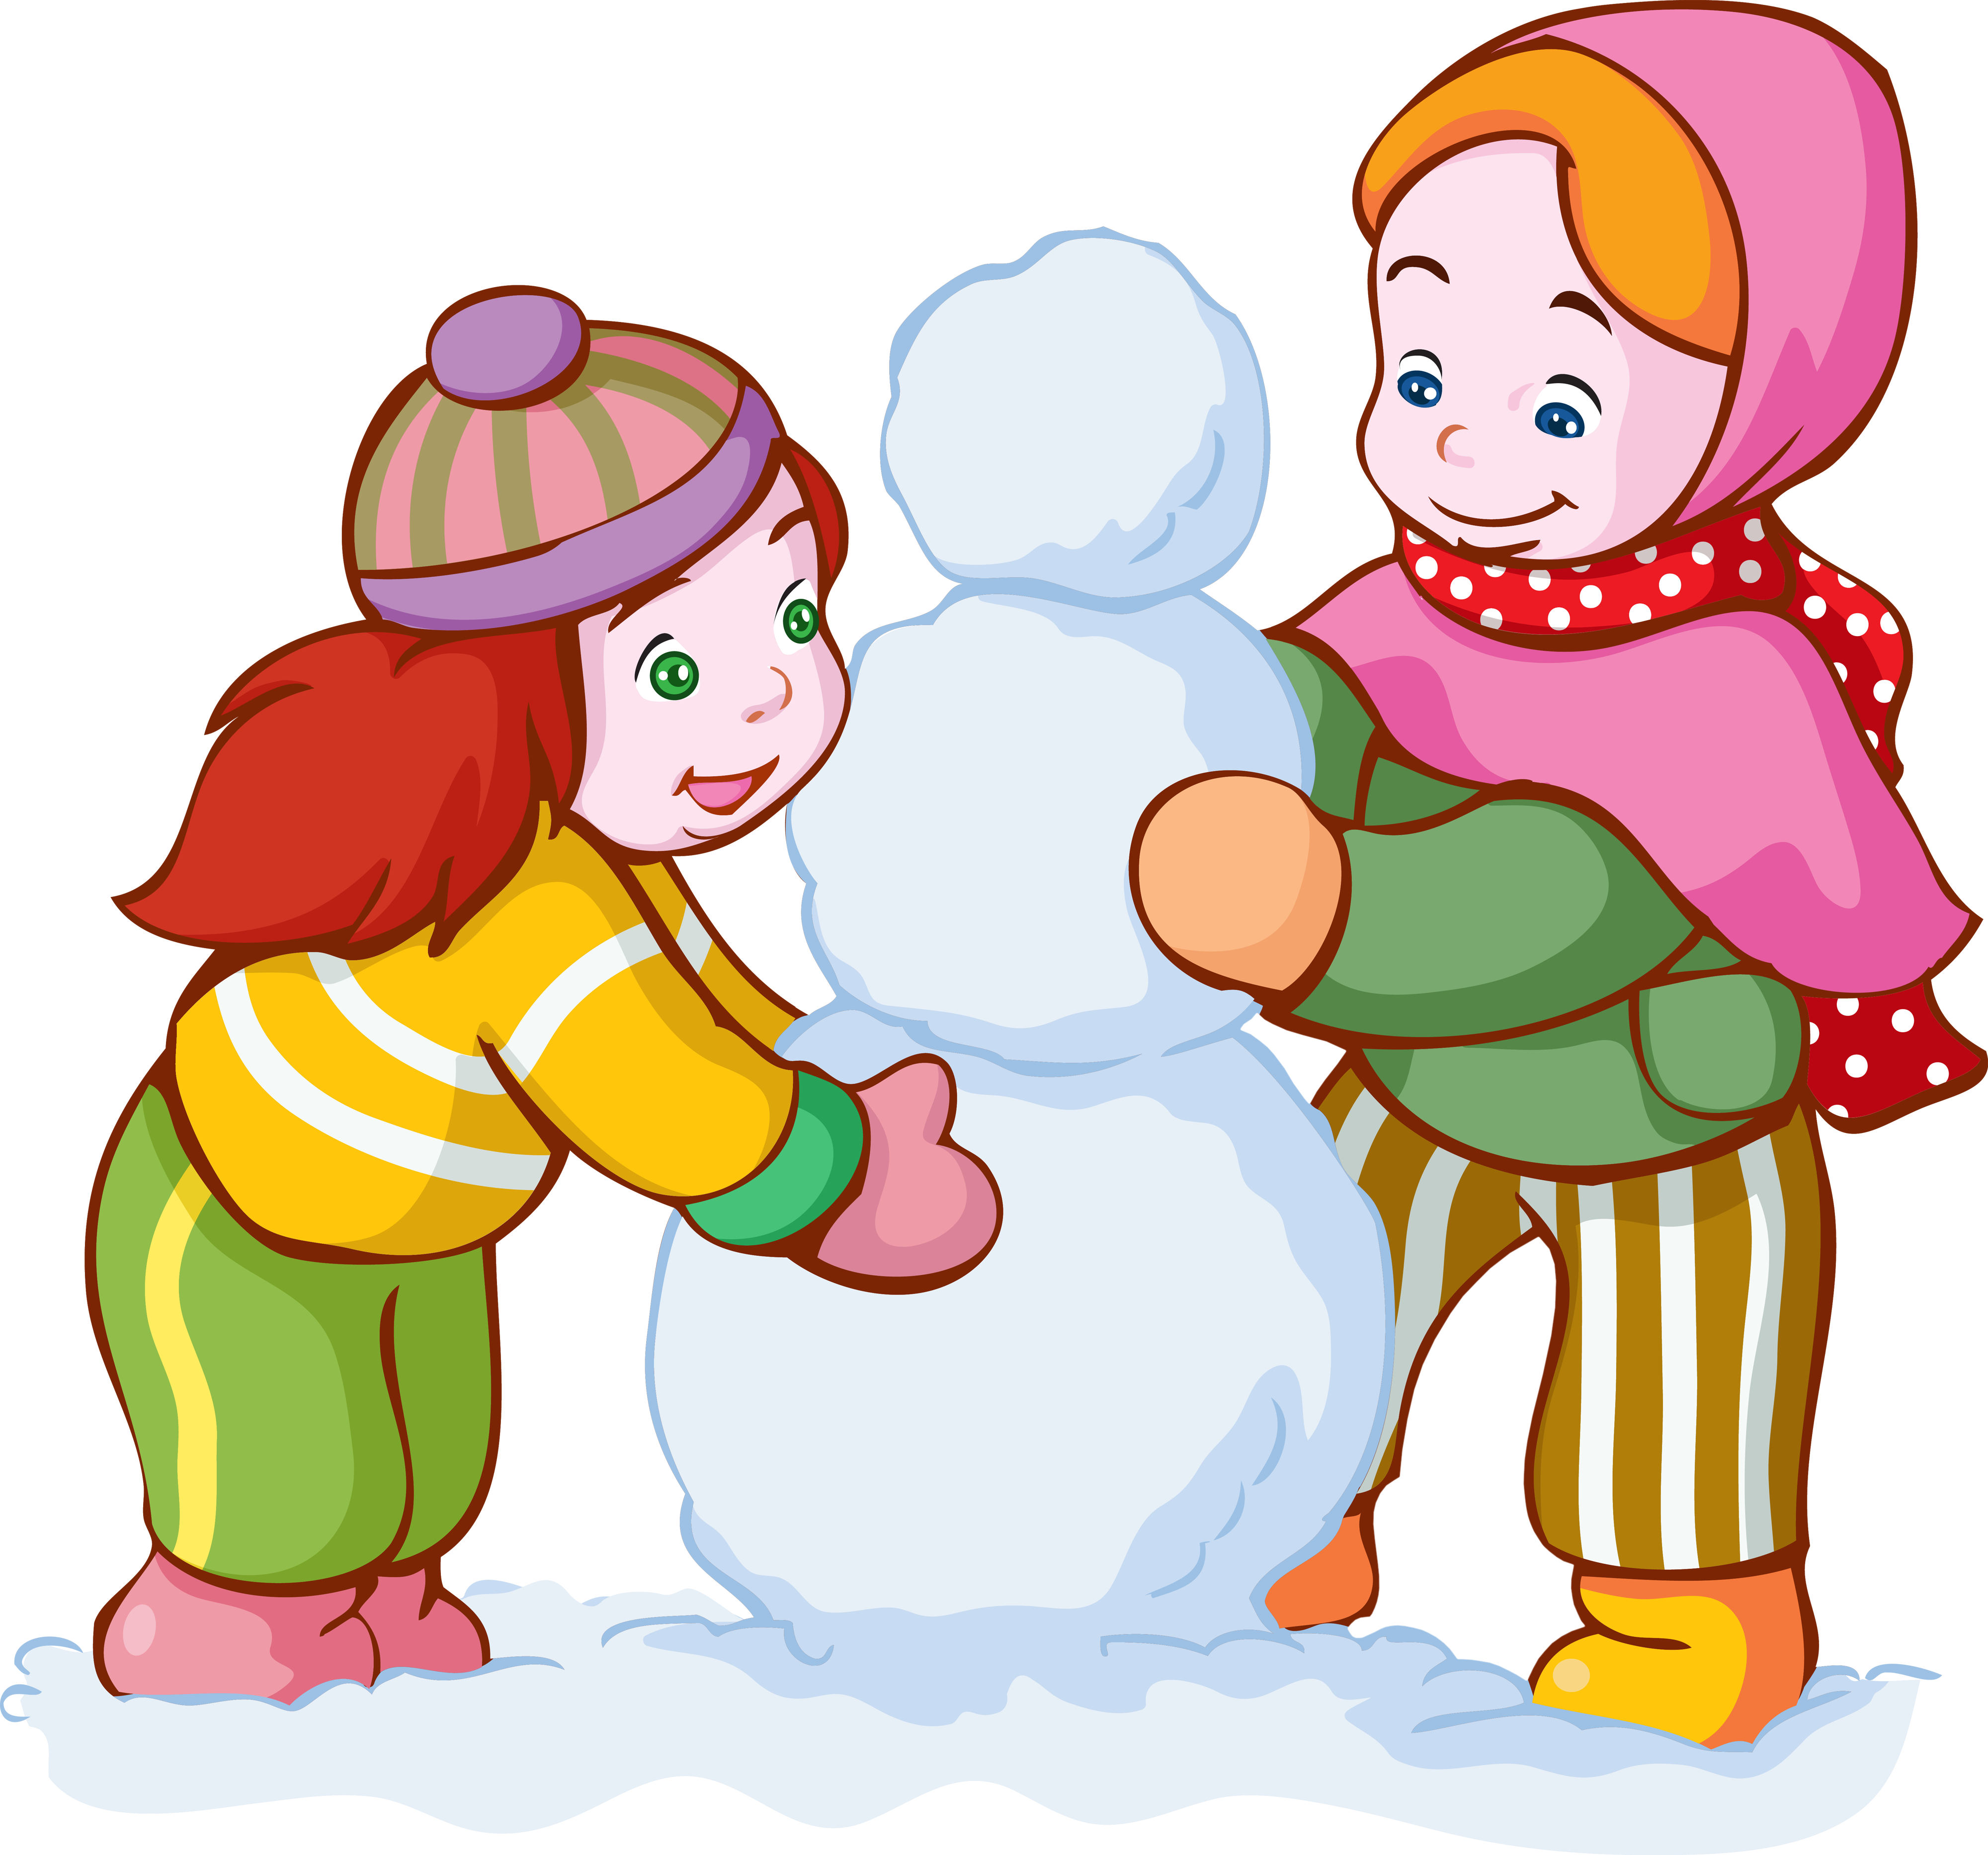 Девочка лепит снеговика. Дети лепят снеговика. Игра в снежки. Дети играют зимой.